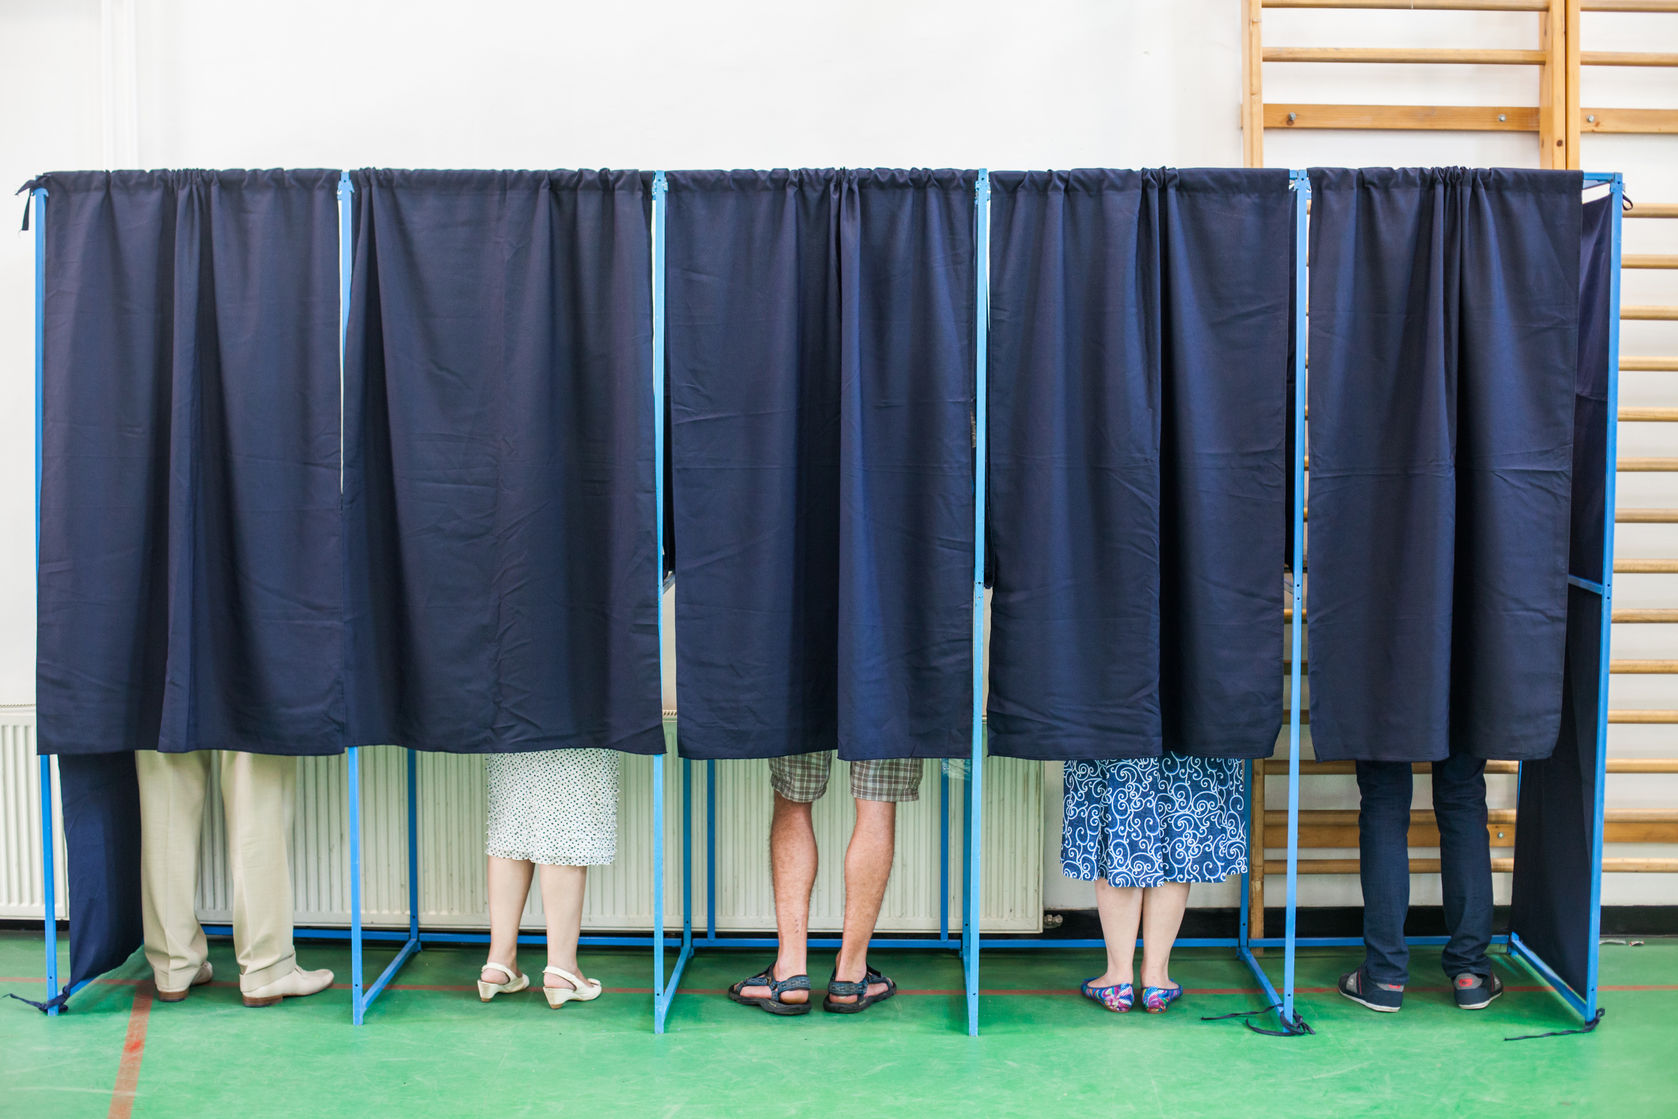 People-in-voting-booth.jpg